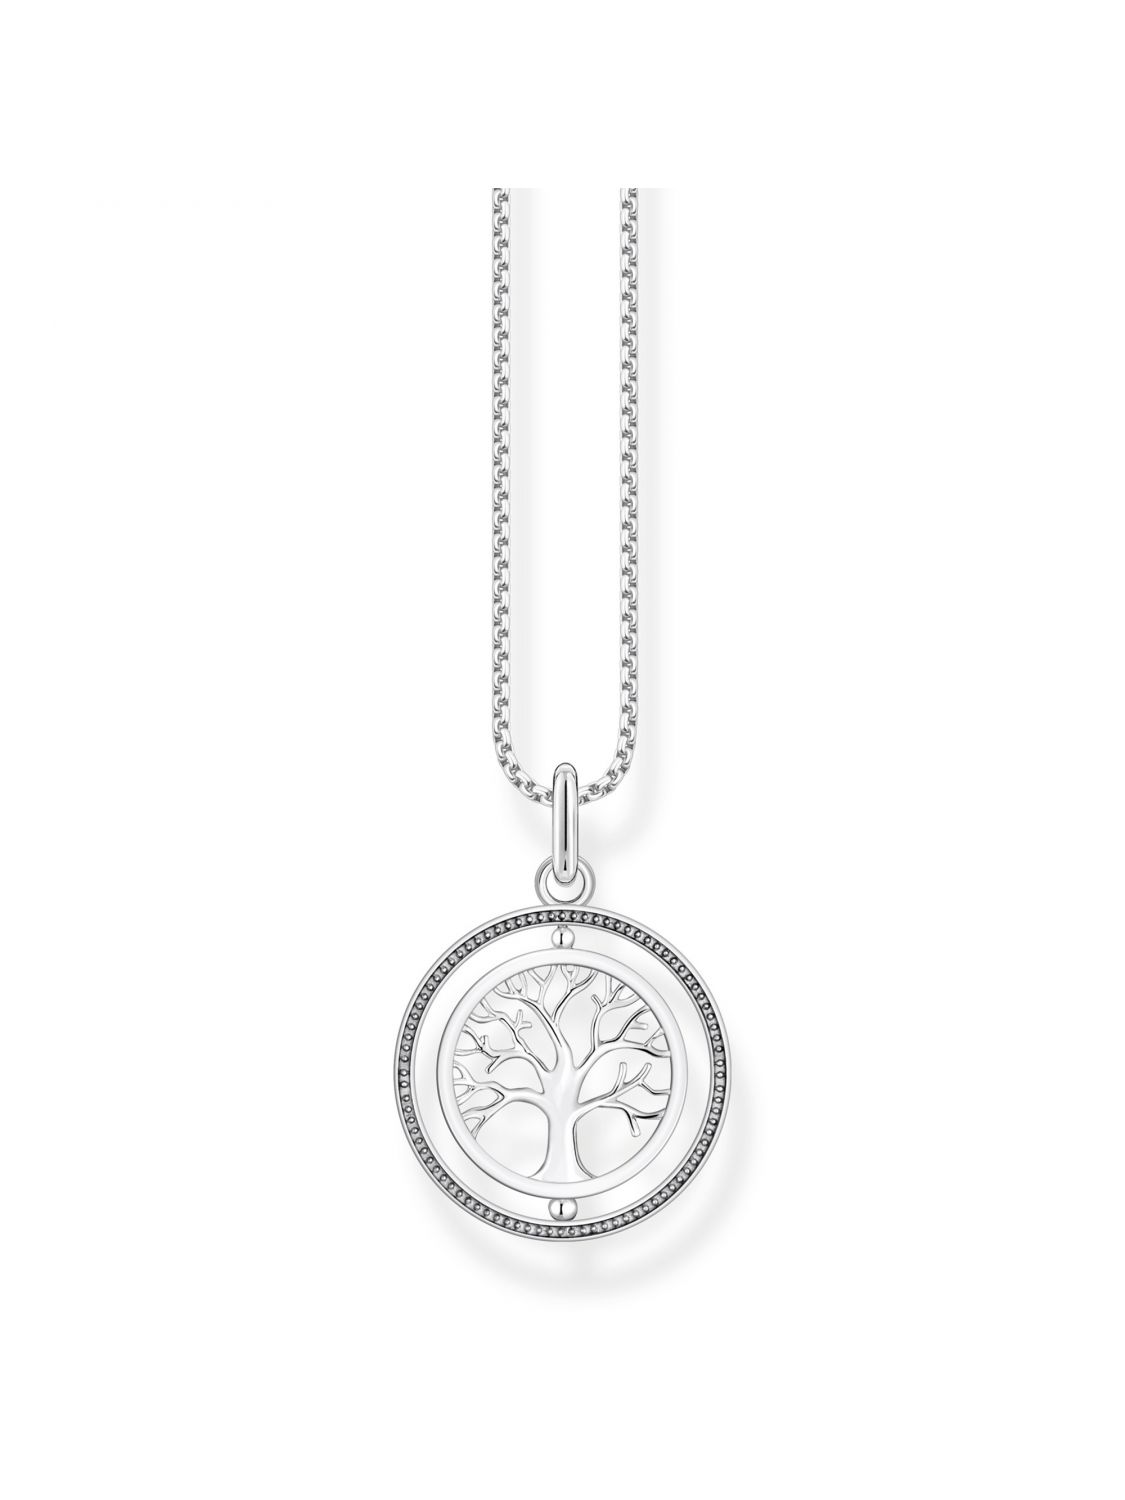 Thomas Sabo Circle White Stone Silver Necklace|Peter Jackson the Jeweller